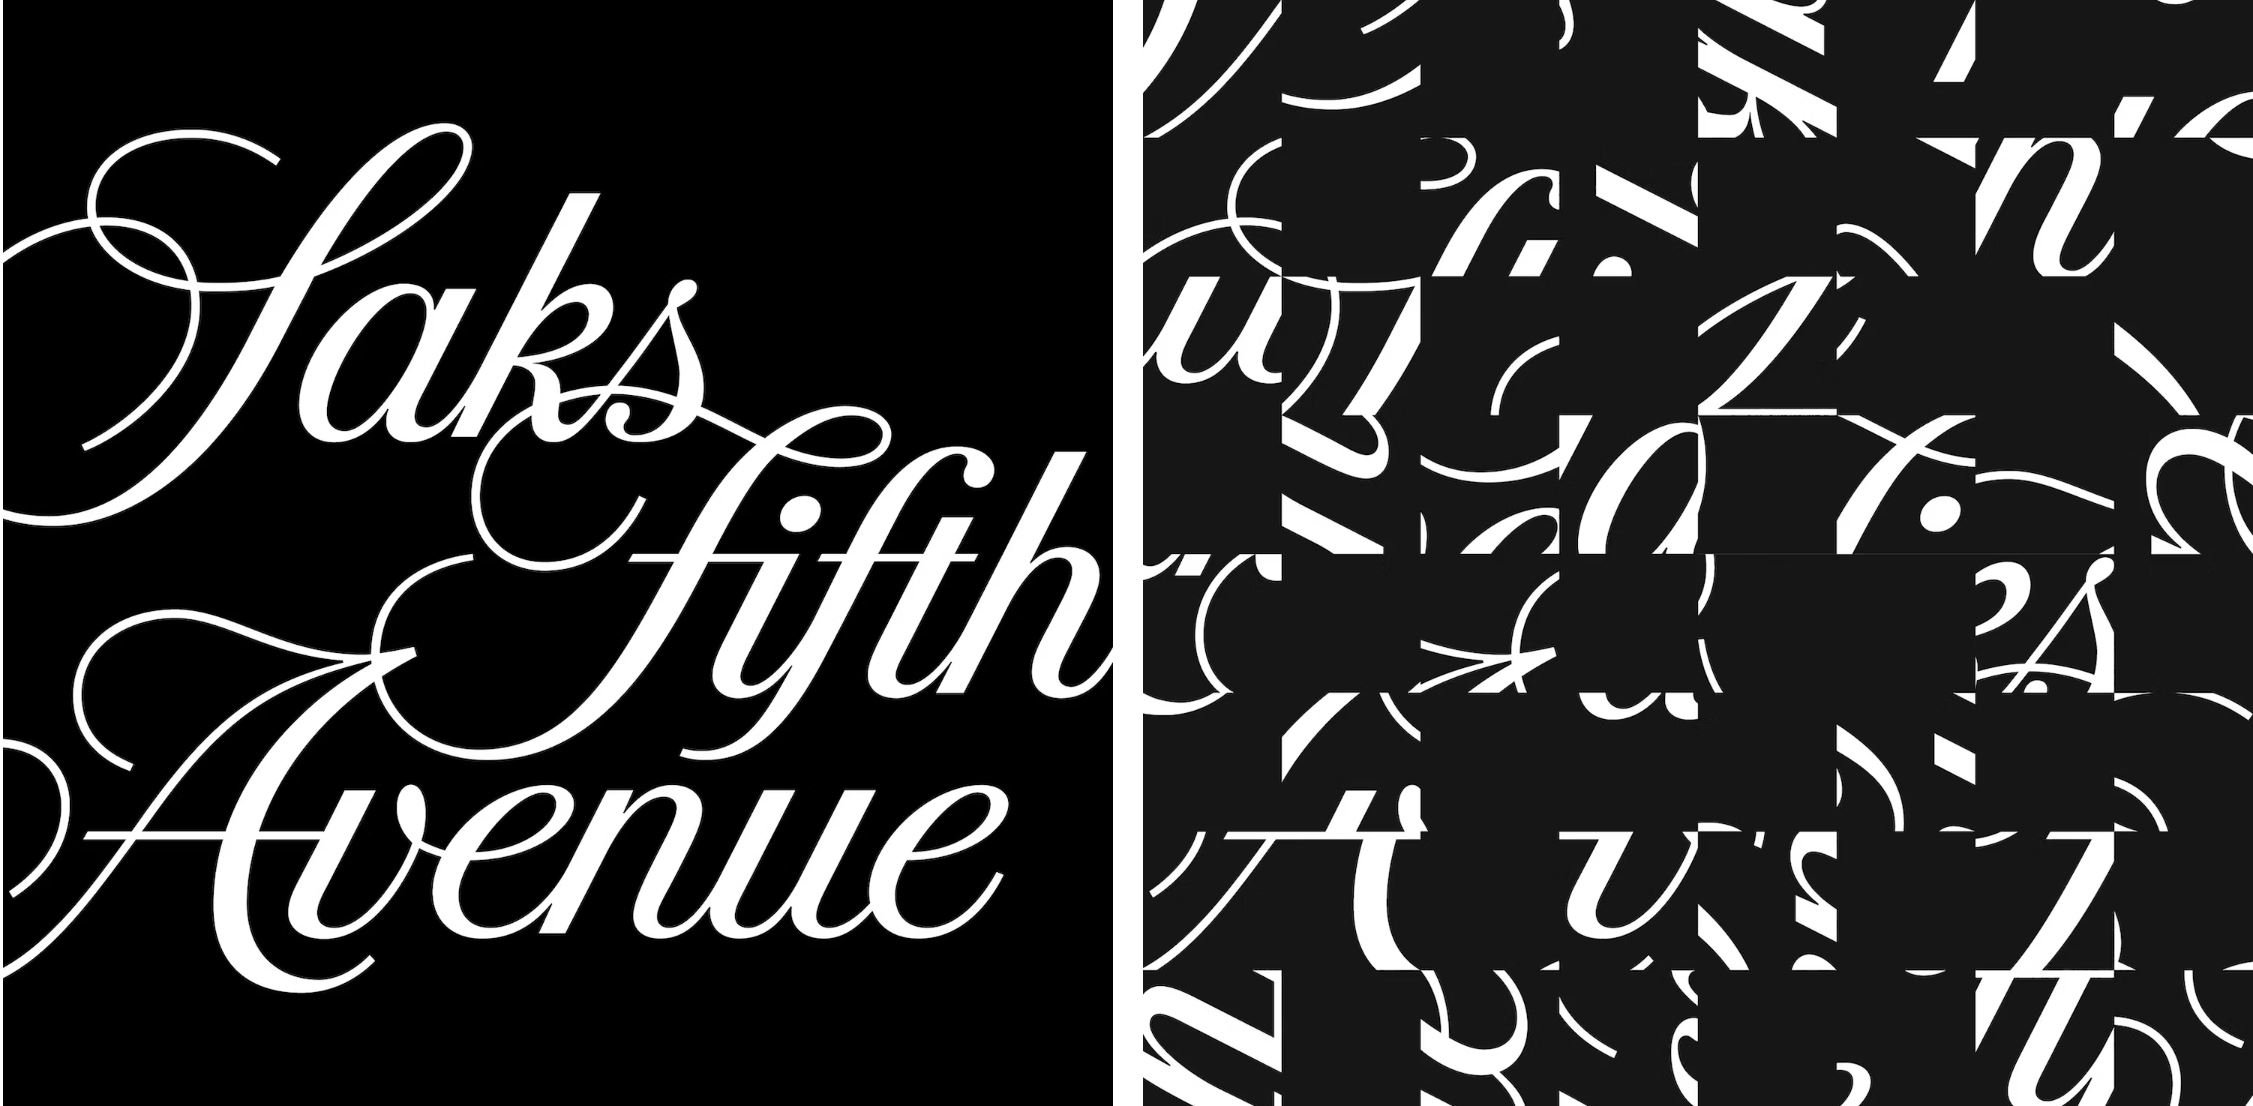 Michael Bierut-Saks Fifth avenue-logos - The New York Times